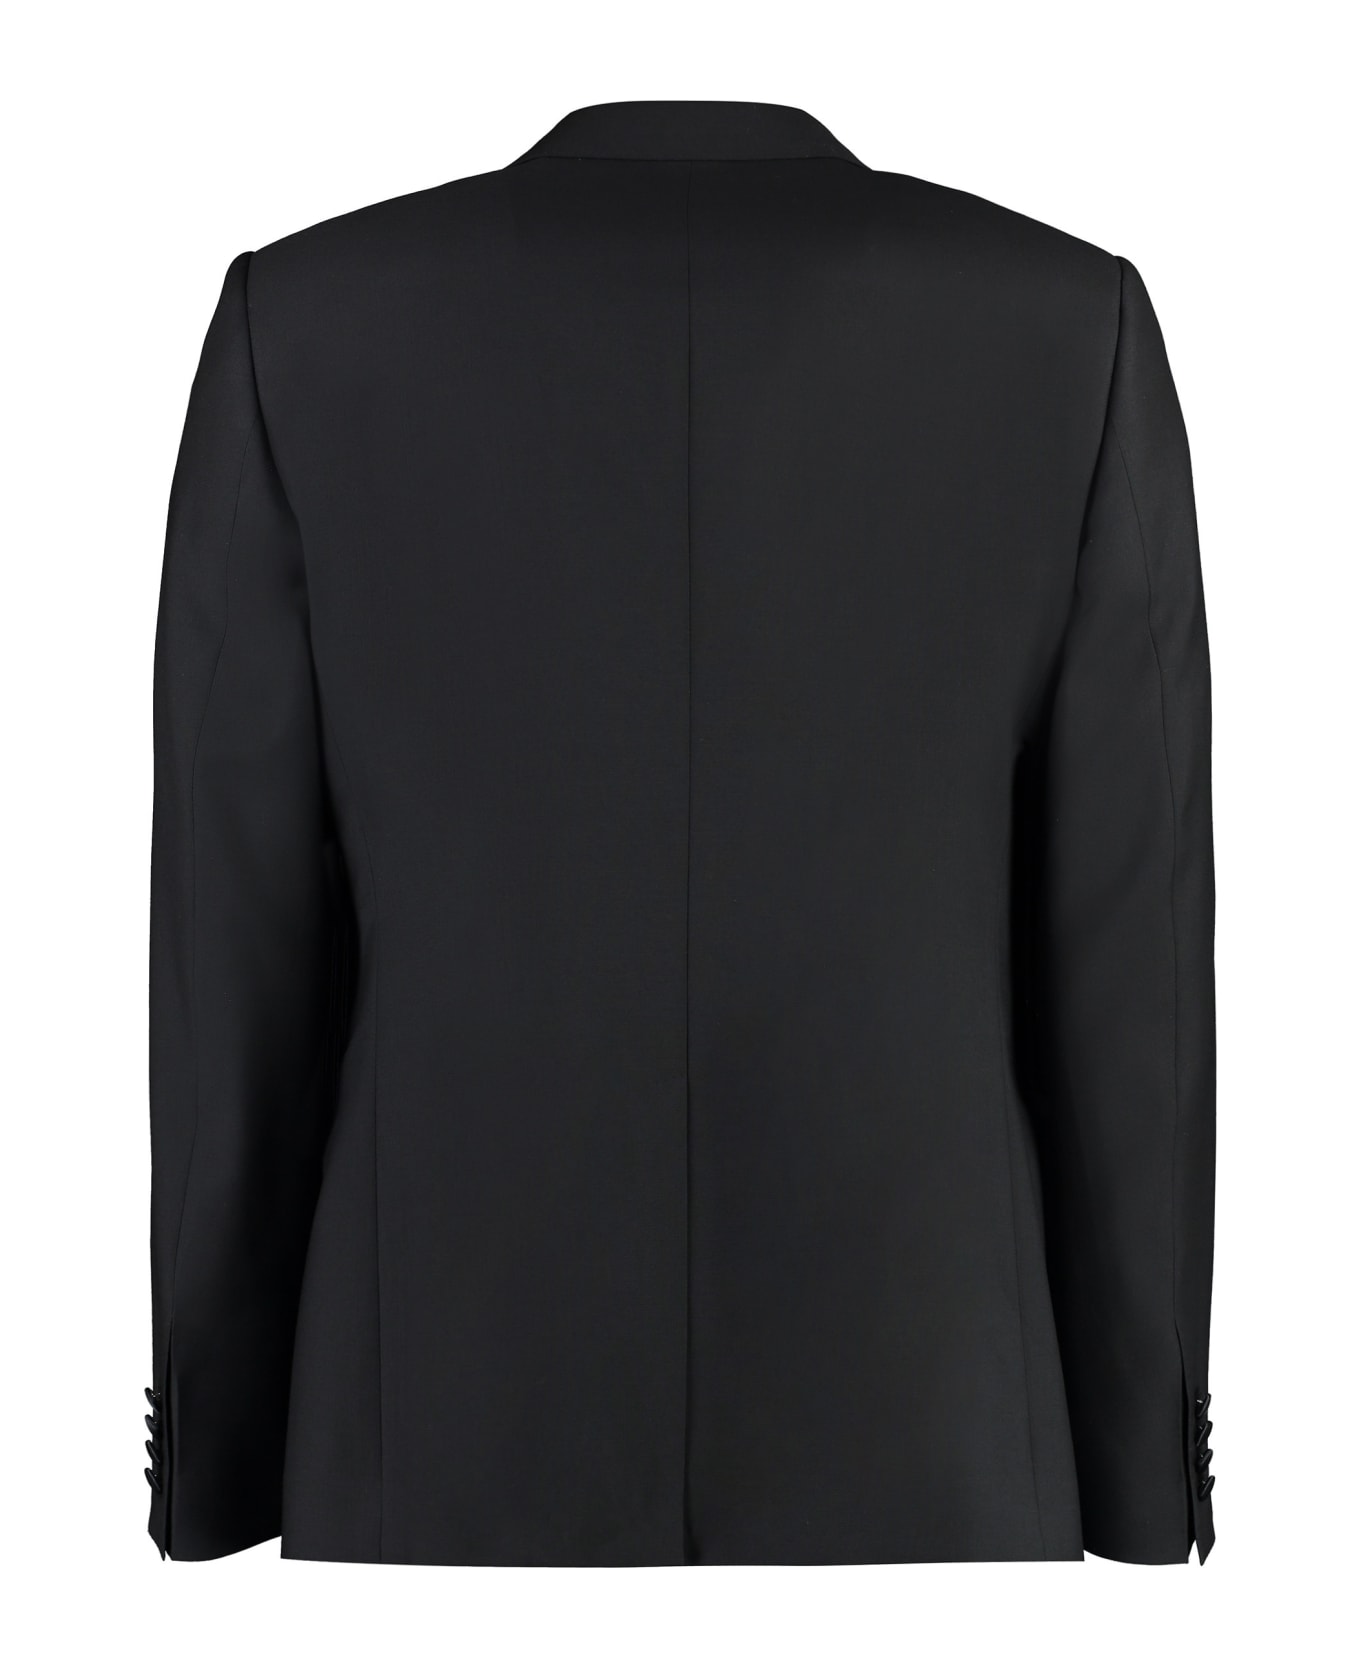 Dolce & Gabbana Three-piece Suit In Wool And Silk - black スーツ